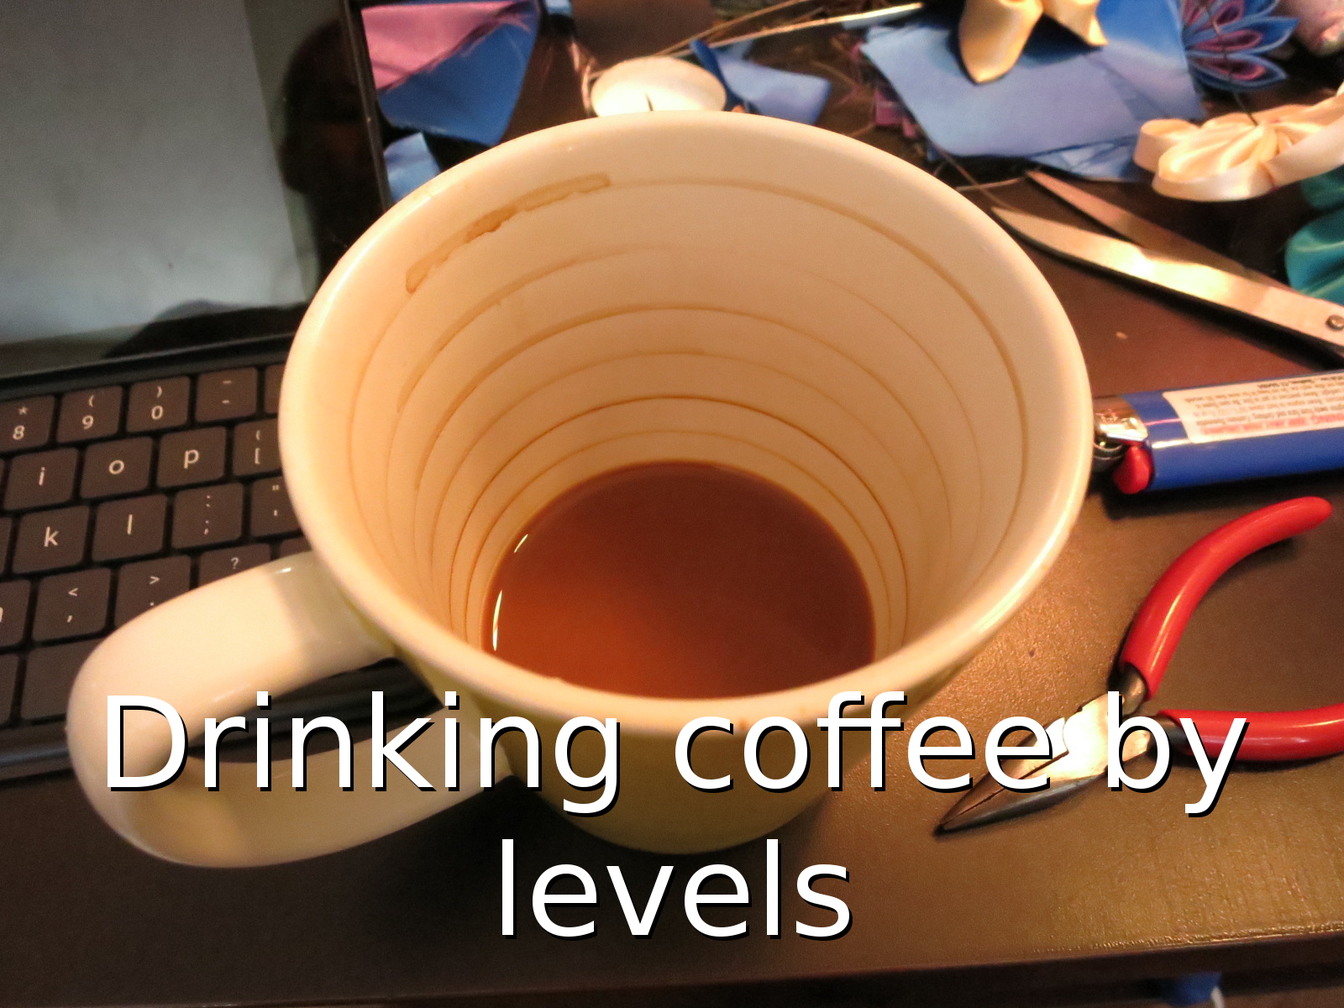 Coffee by levels - meme